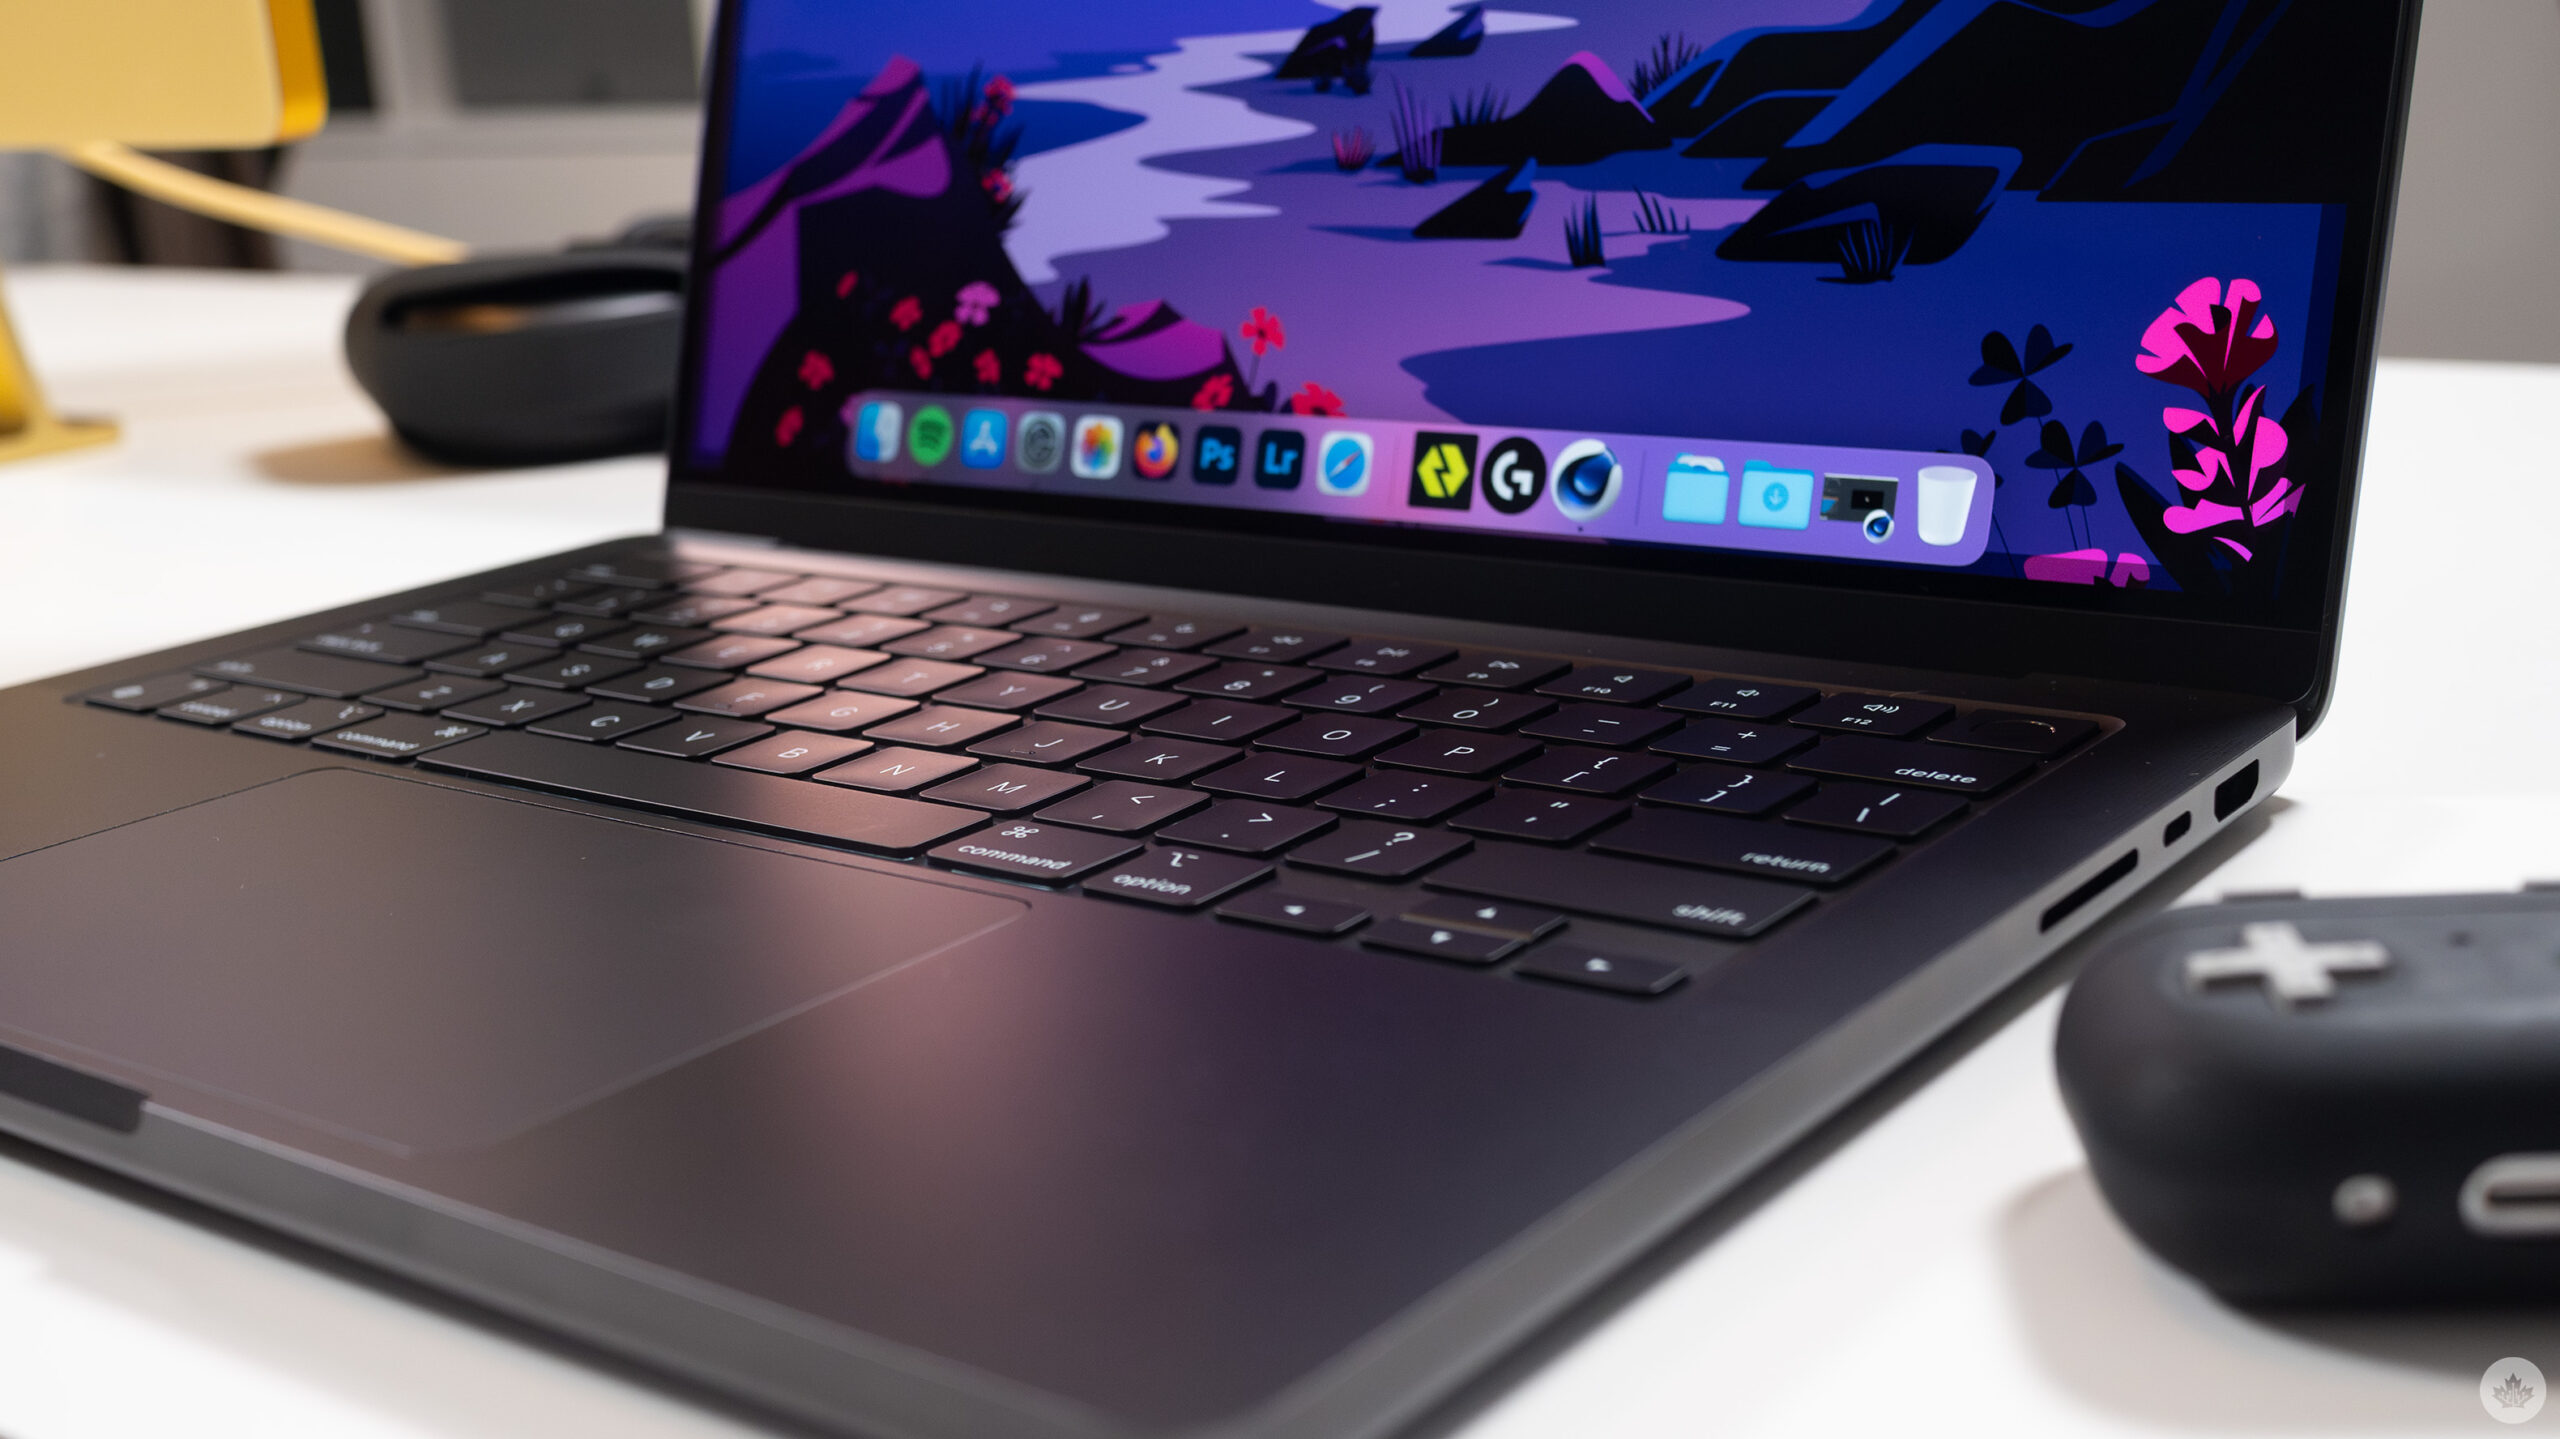 M3 Macbook Pro teardown details the new ‘Space Black’ anodized finish